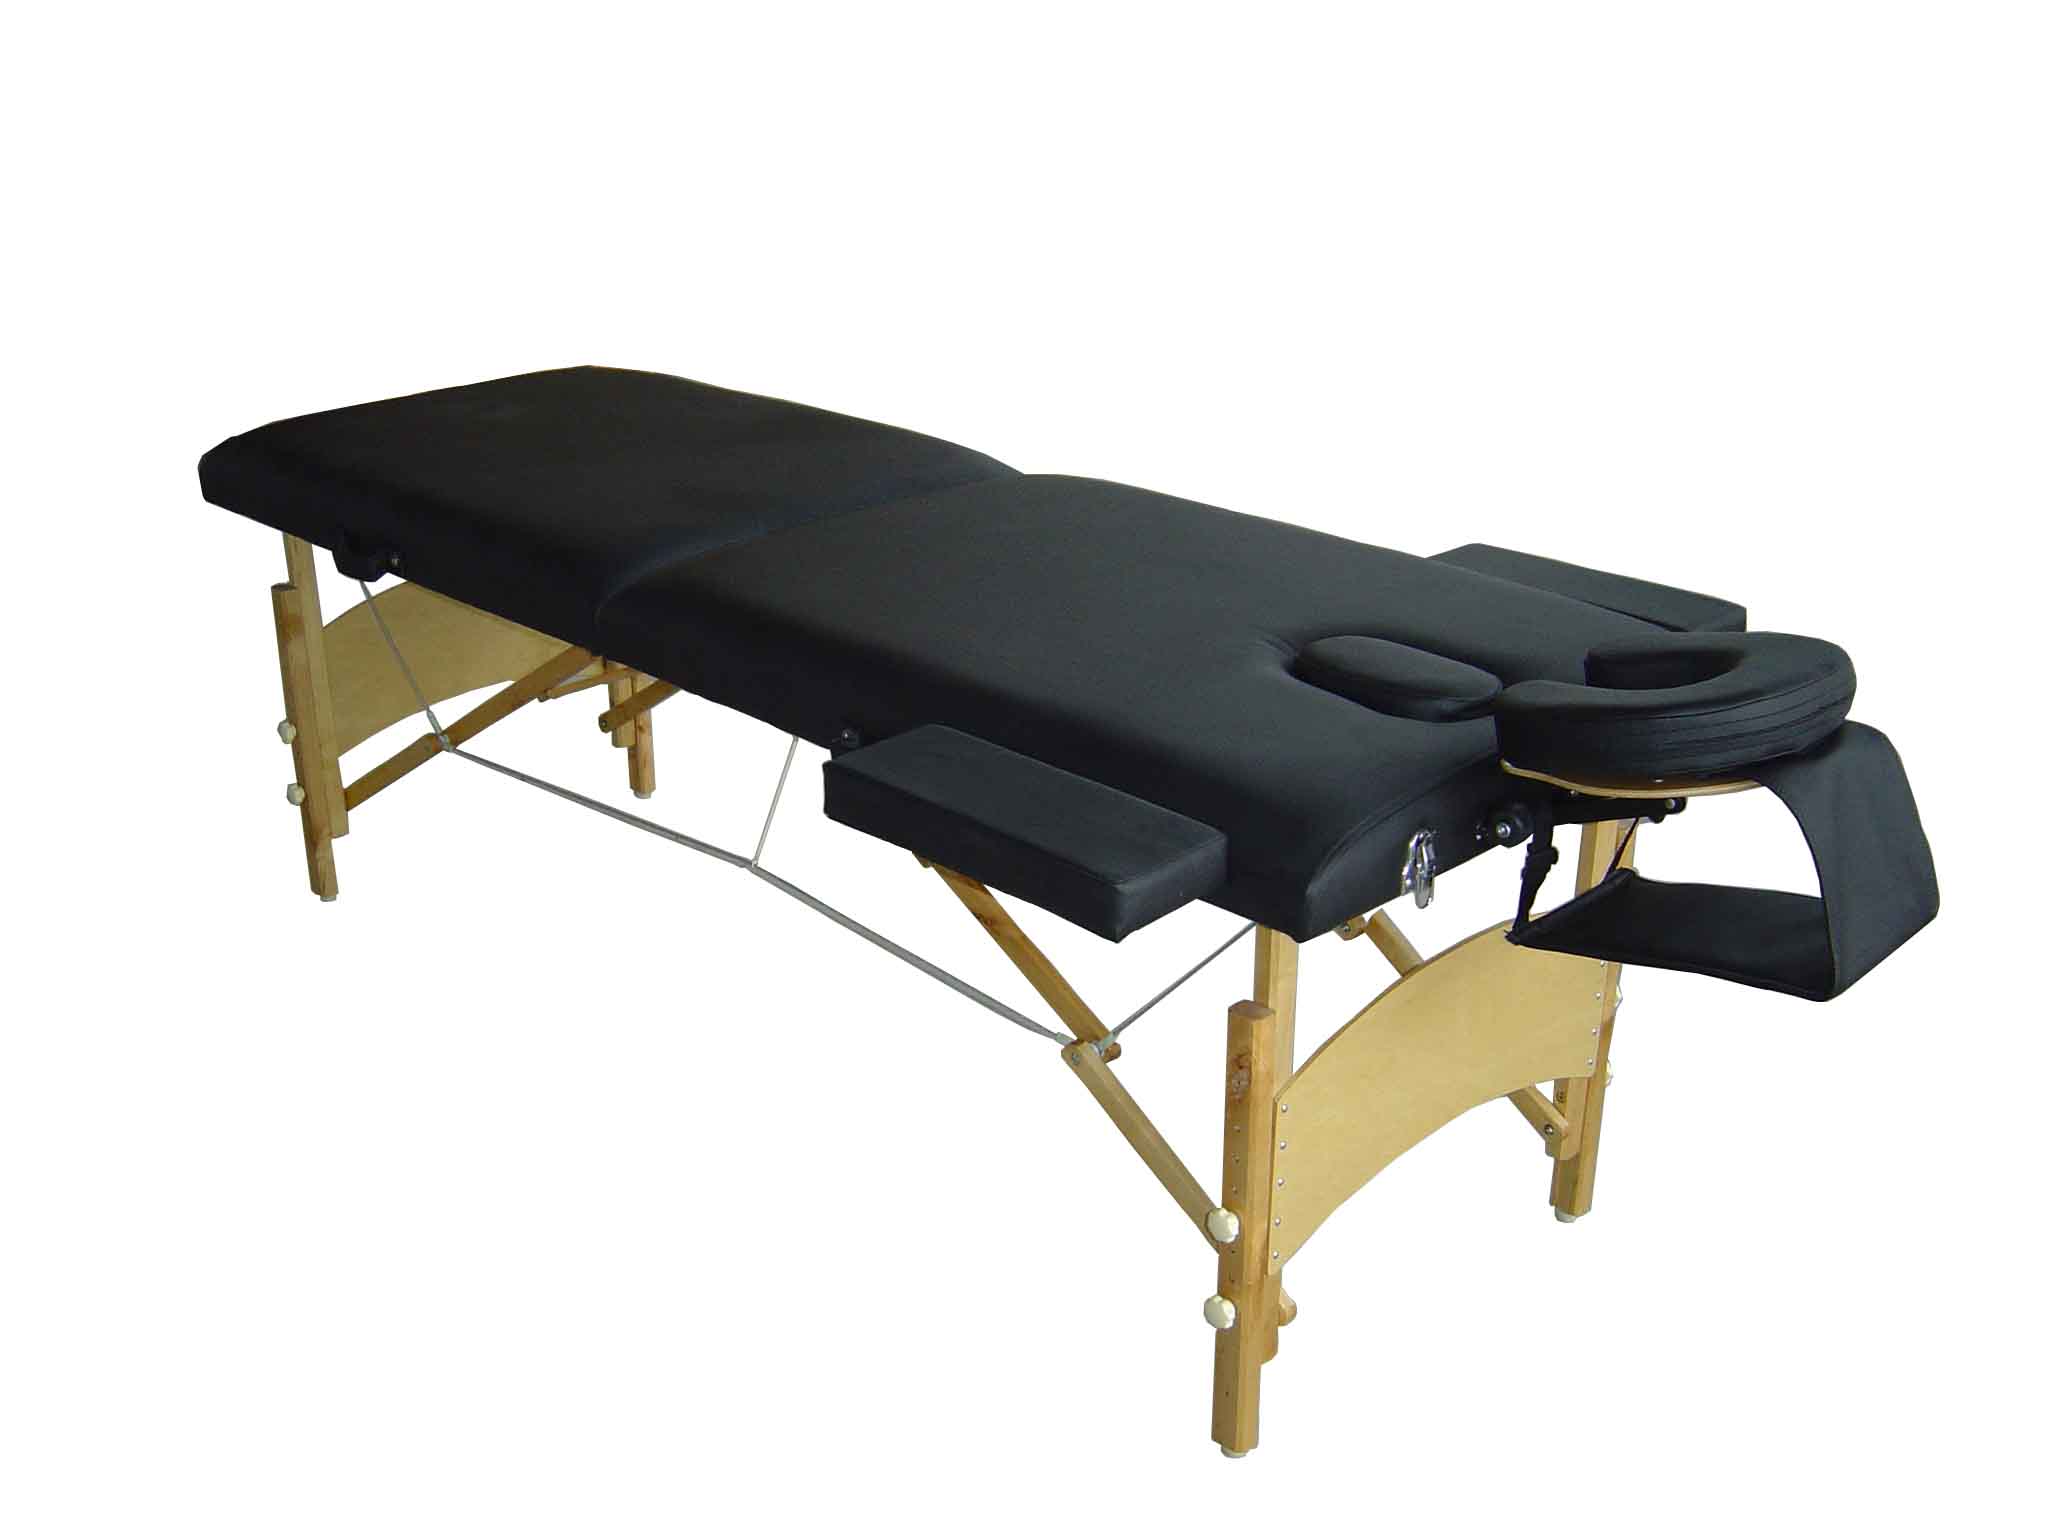  MT-007 Wooden Massage Table (MT-007 Holz-Massageliege)